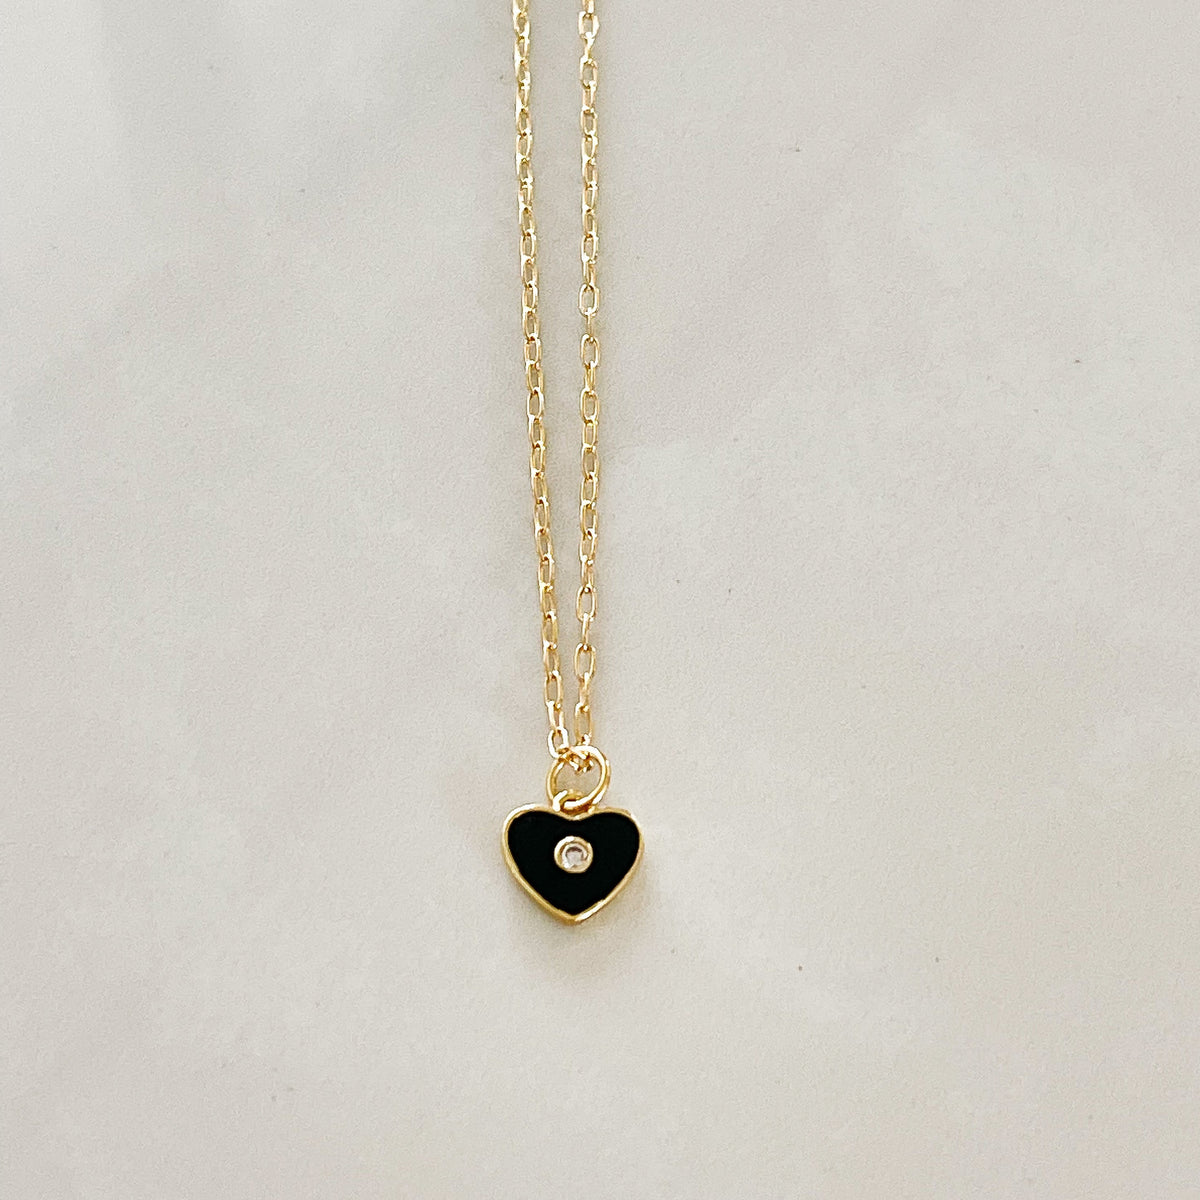 Endless Love Mini Heart Charm Necklace - Black